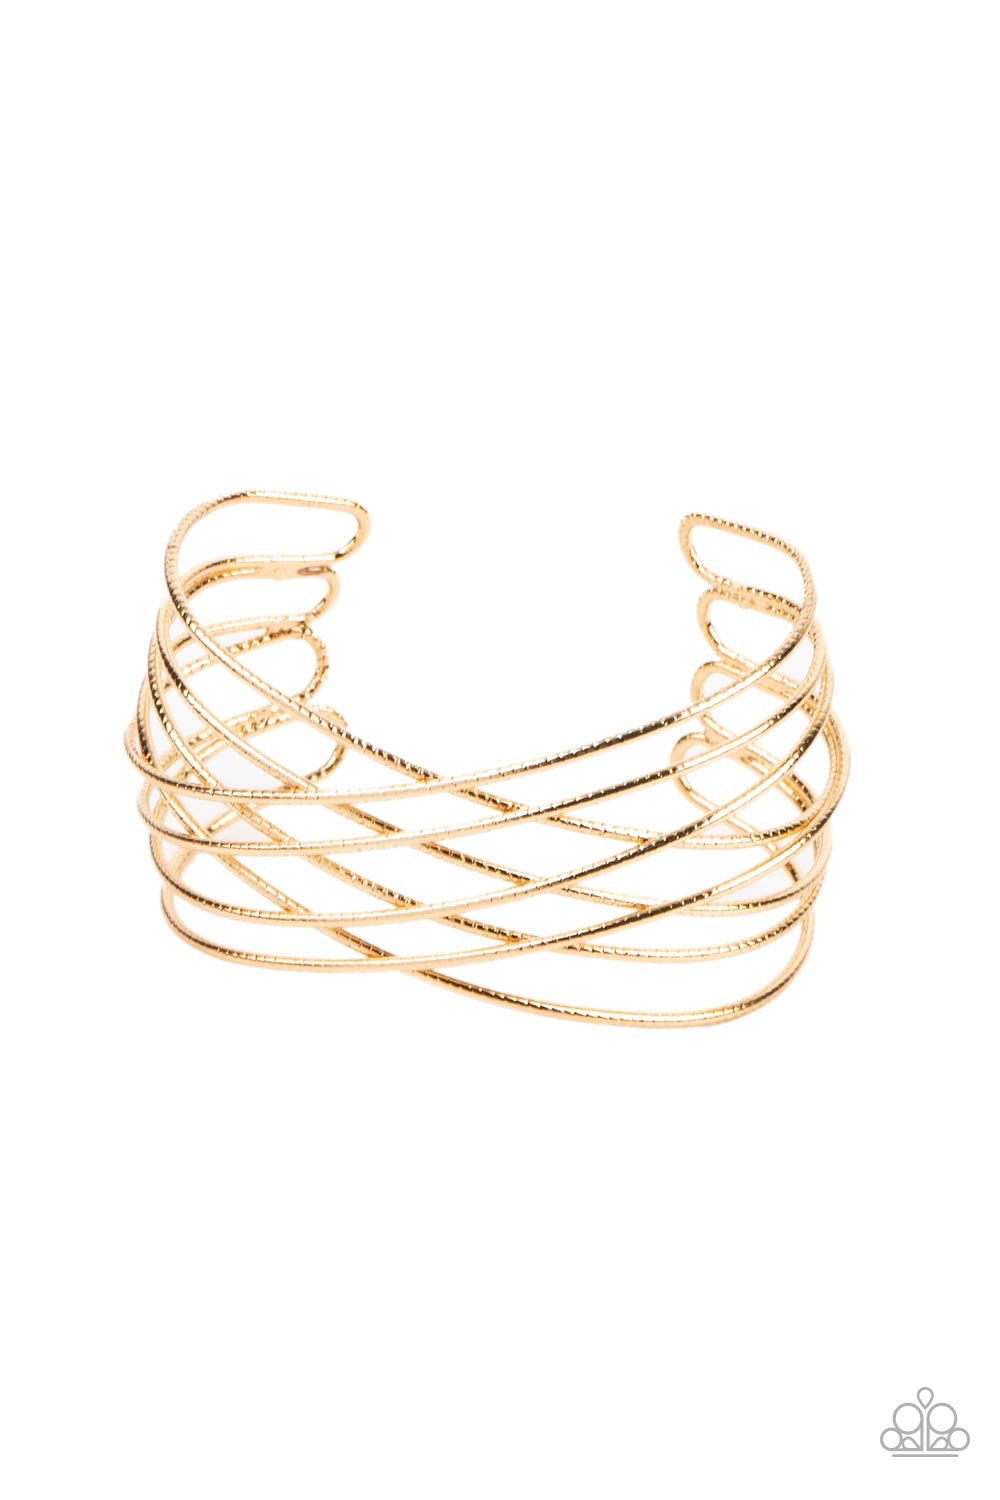 Paparazzi Strike Out Shimmer - Gold Bracelet -Paparazzi Jewelry Images 